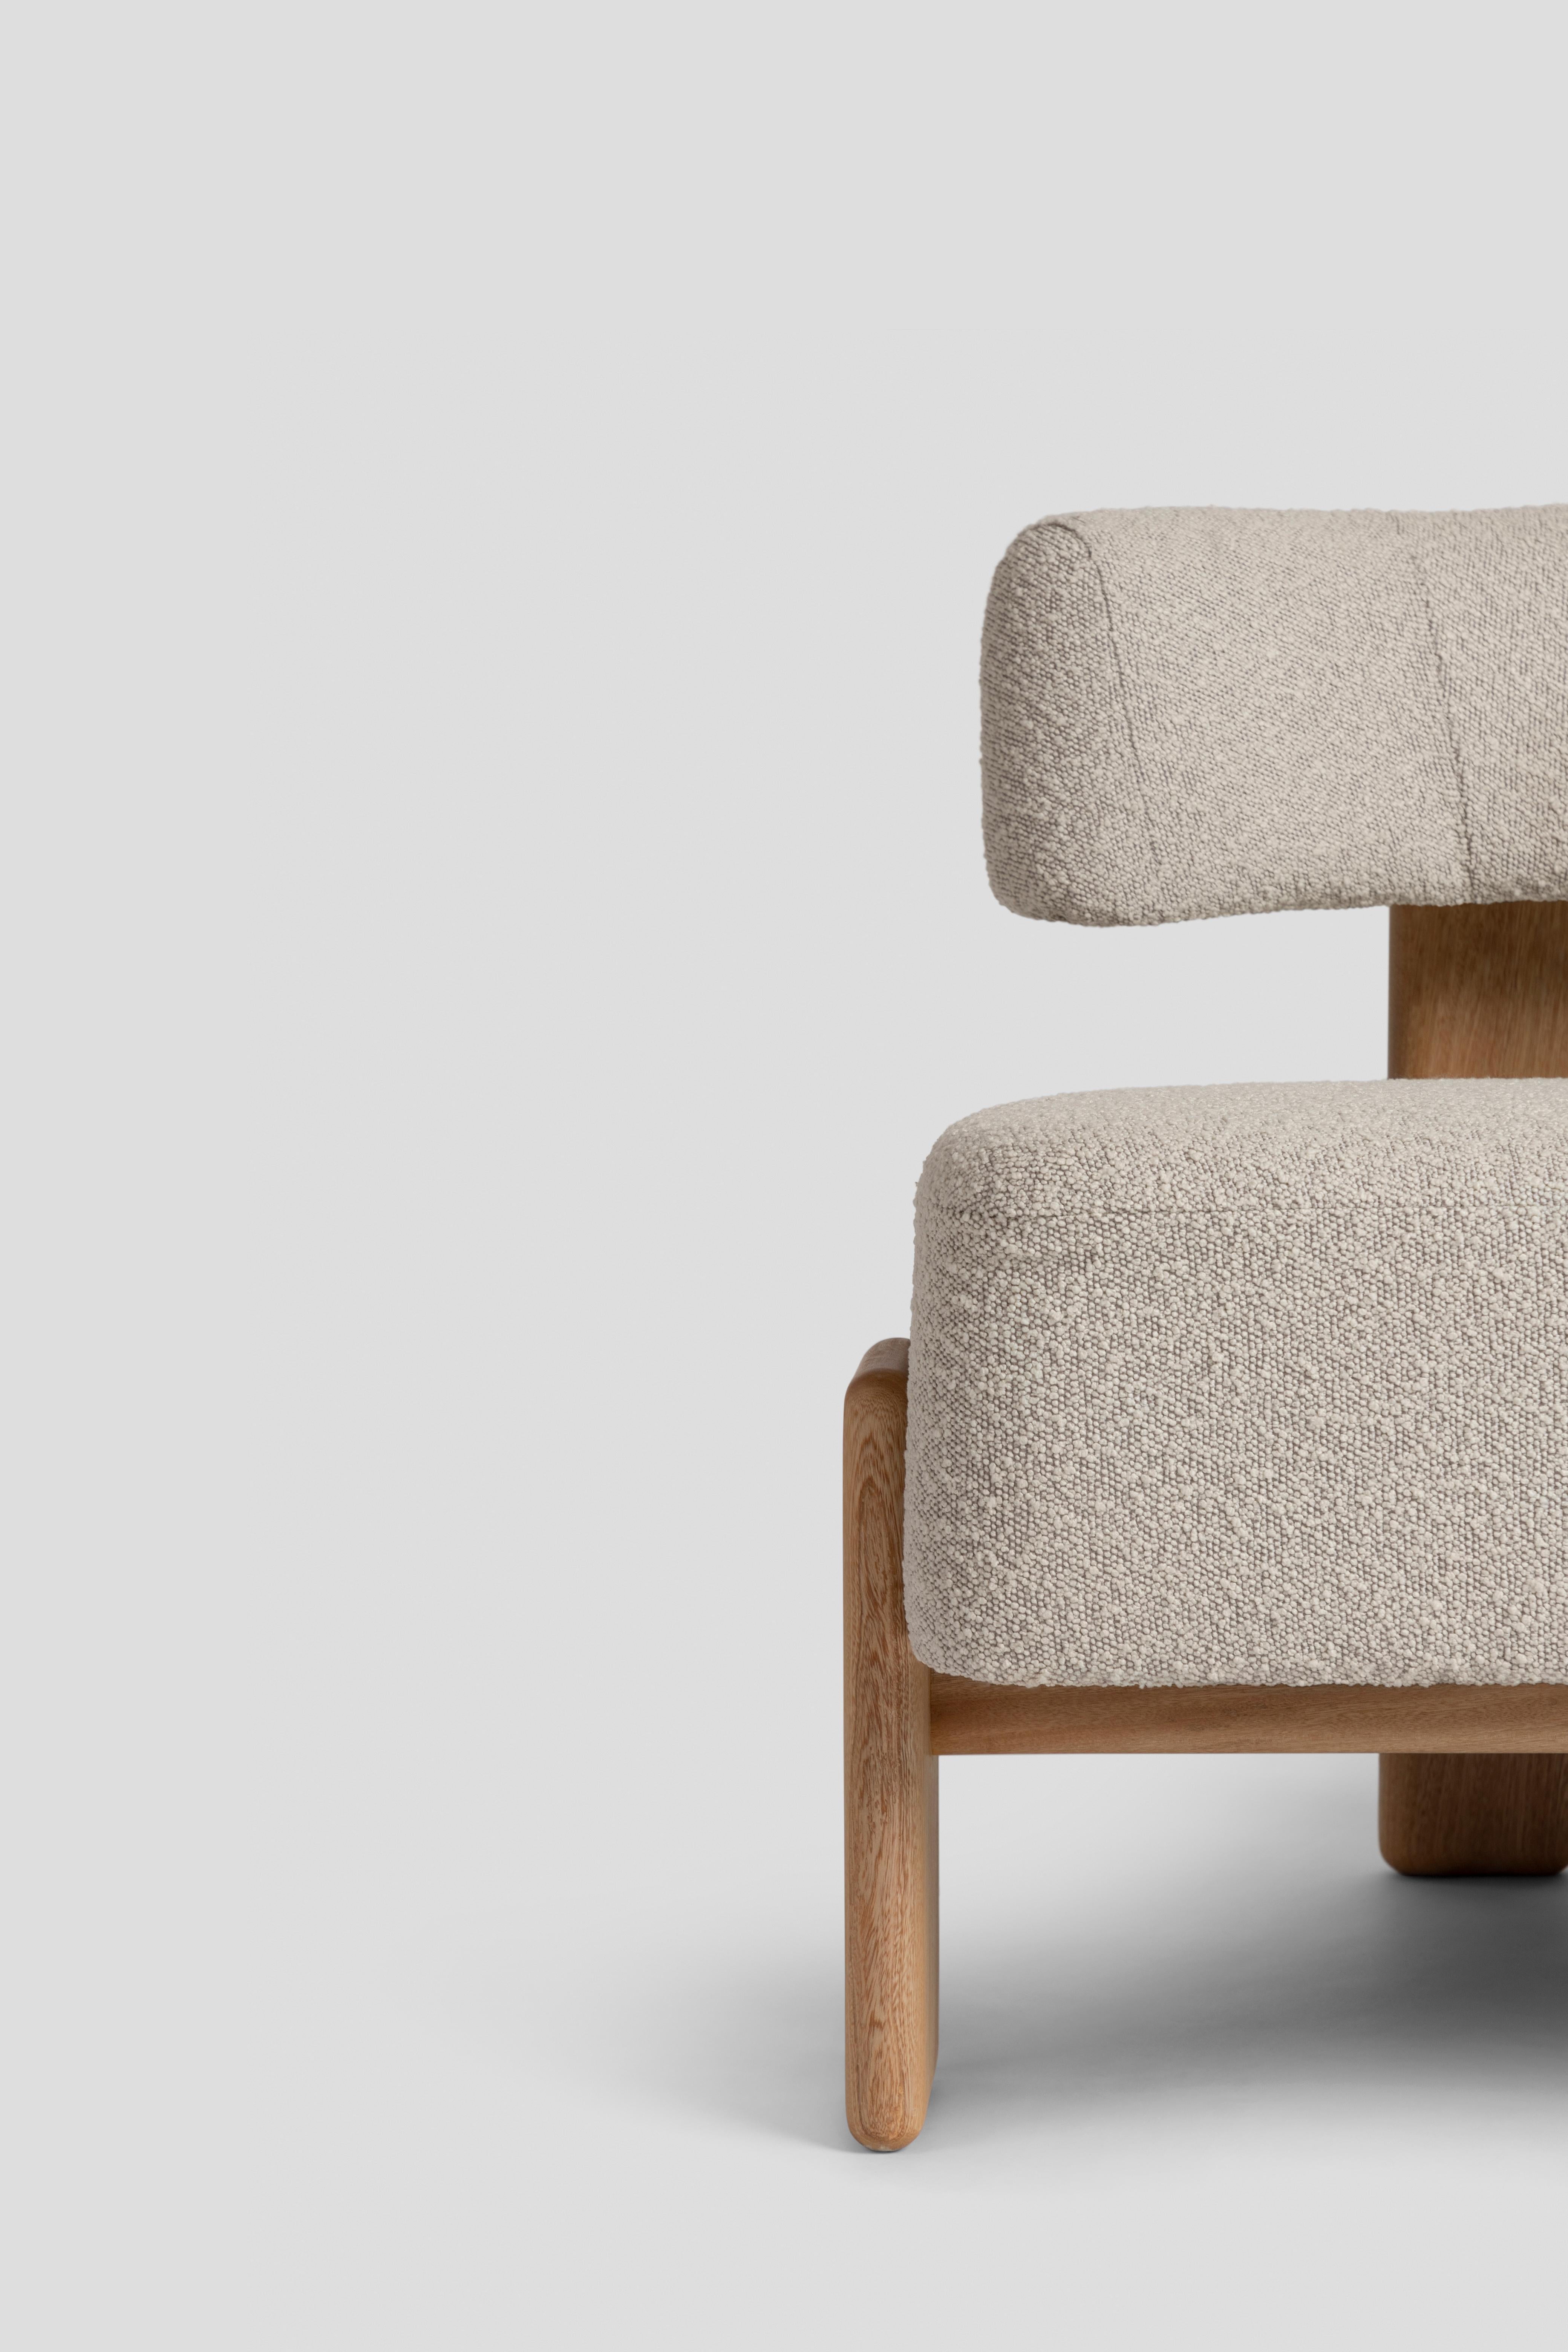 De la Paz Low Chair Solid Wood COM, Contemporary Mexican Design 4